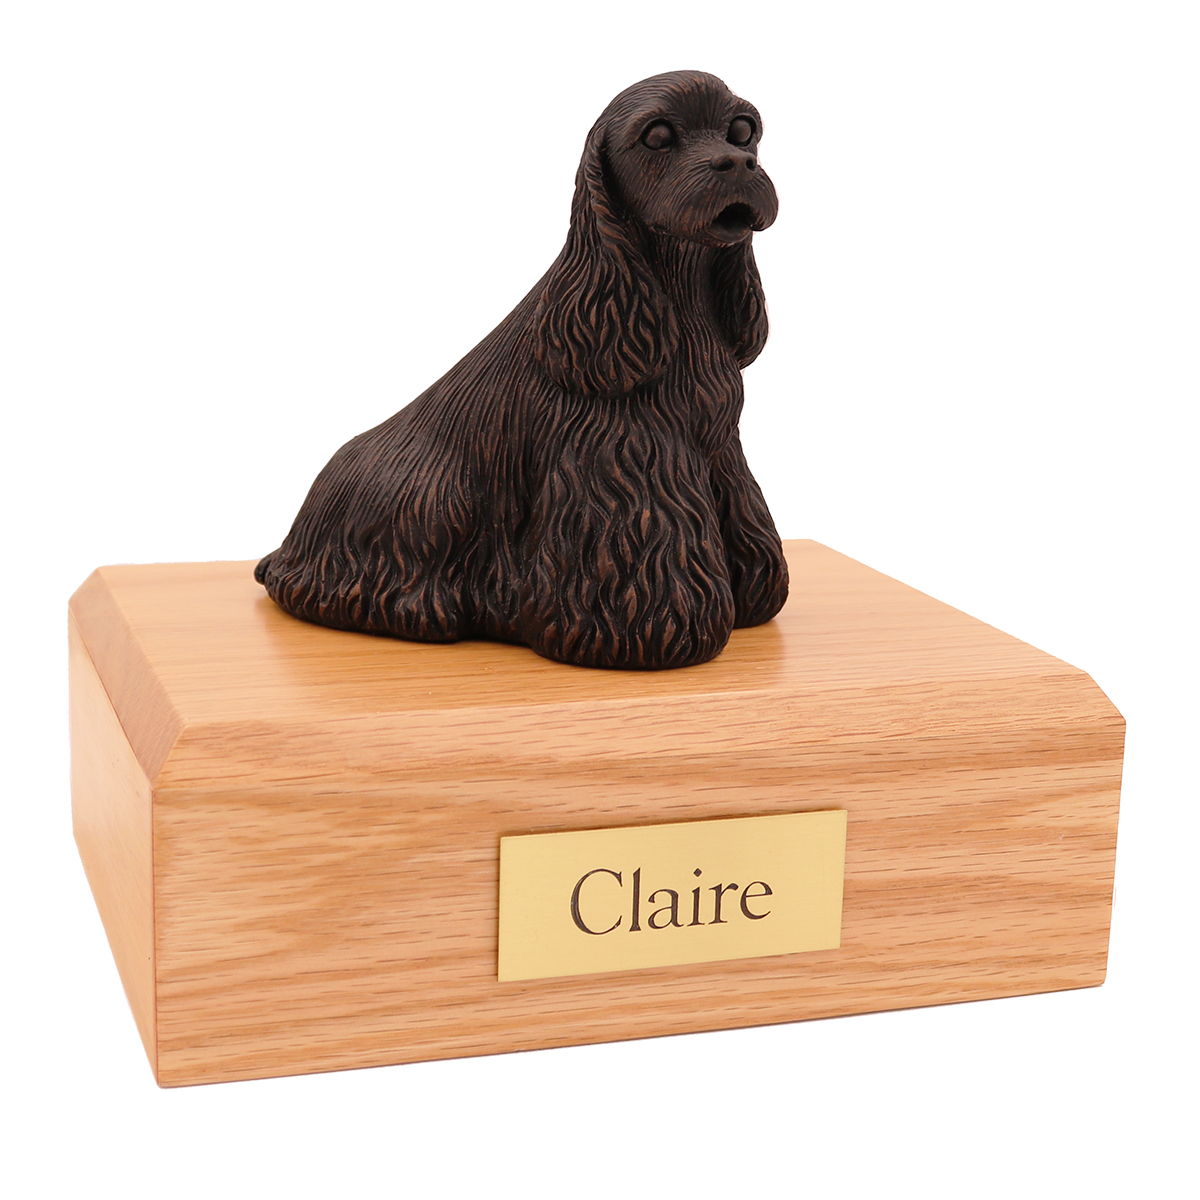 Dog, Cocker Spaniel, Bronze - Figurine Urn